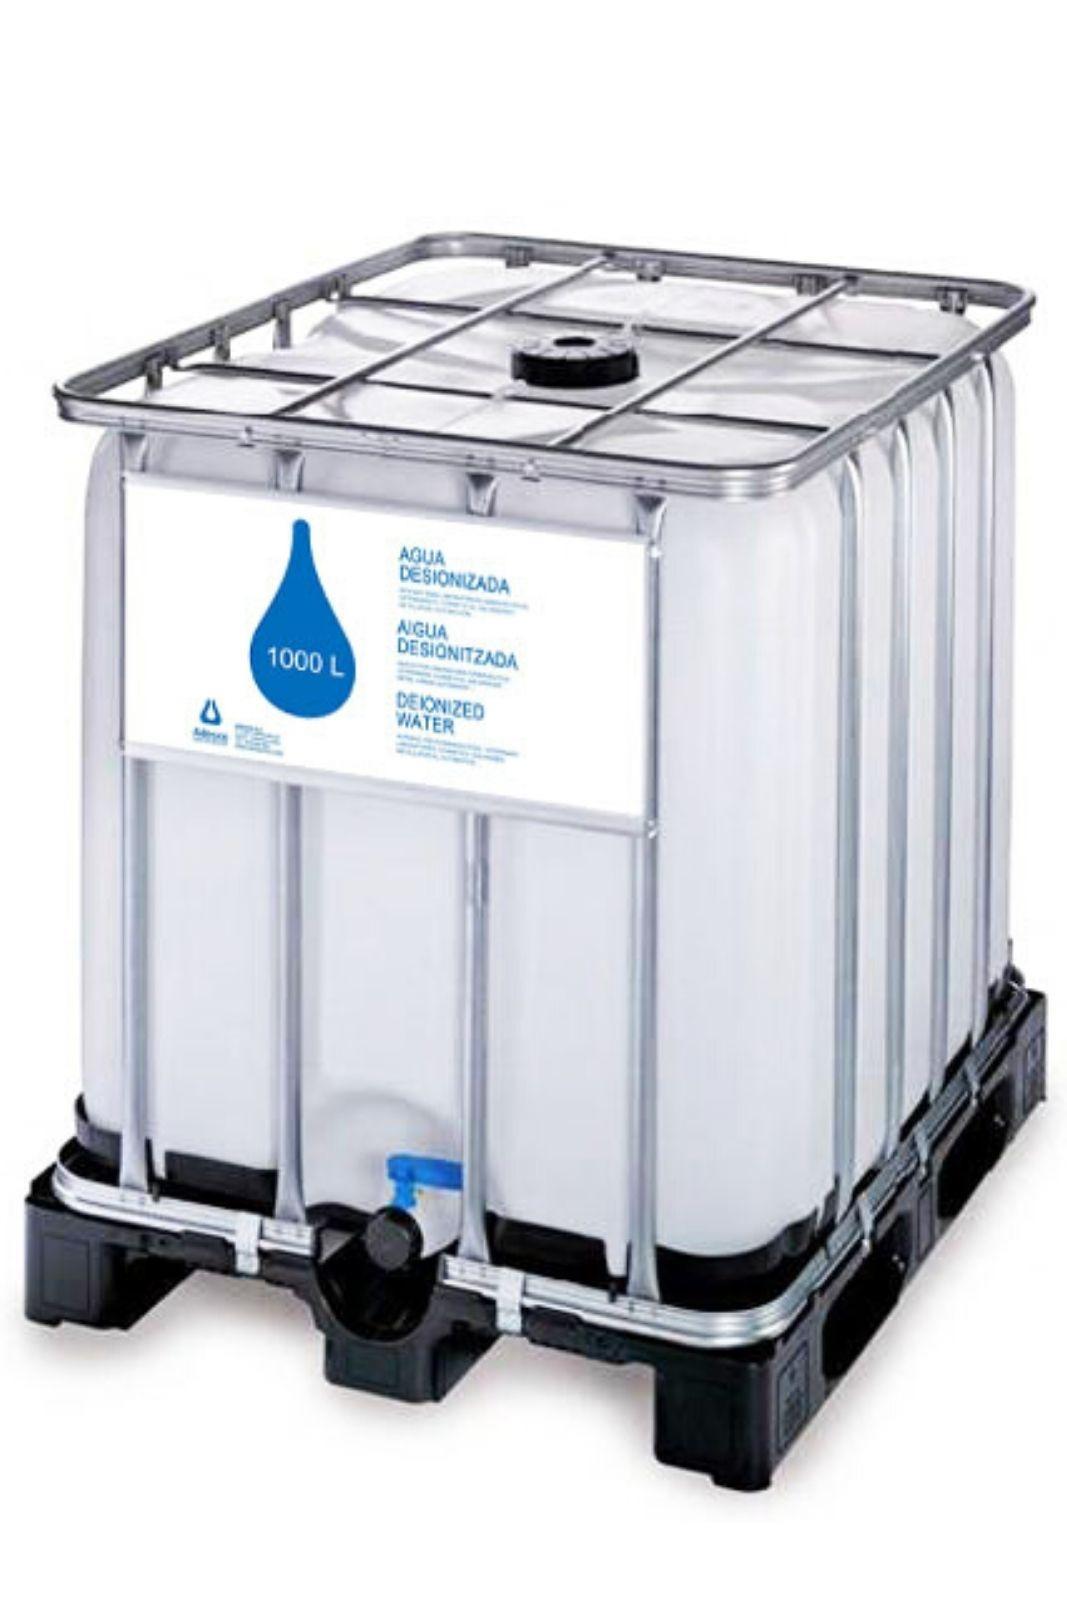 Agua Desionizada (Destilada) en Contenedor 1000L IBC - Adesco